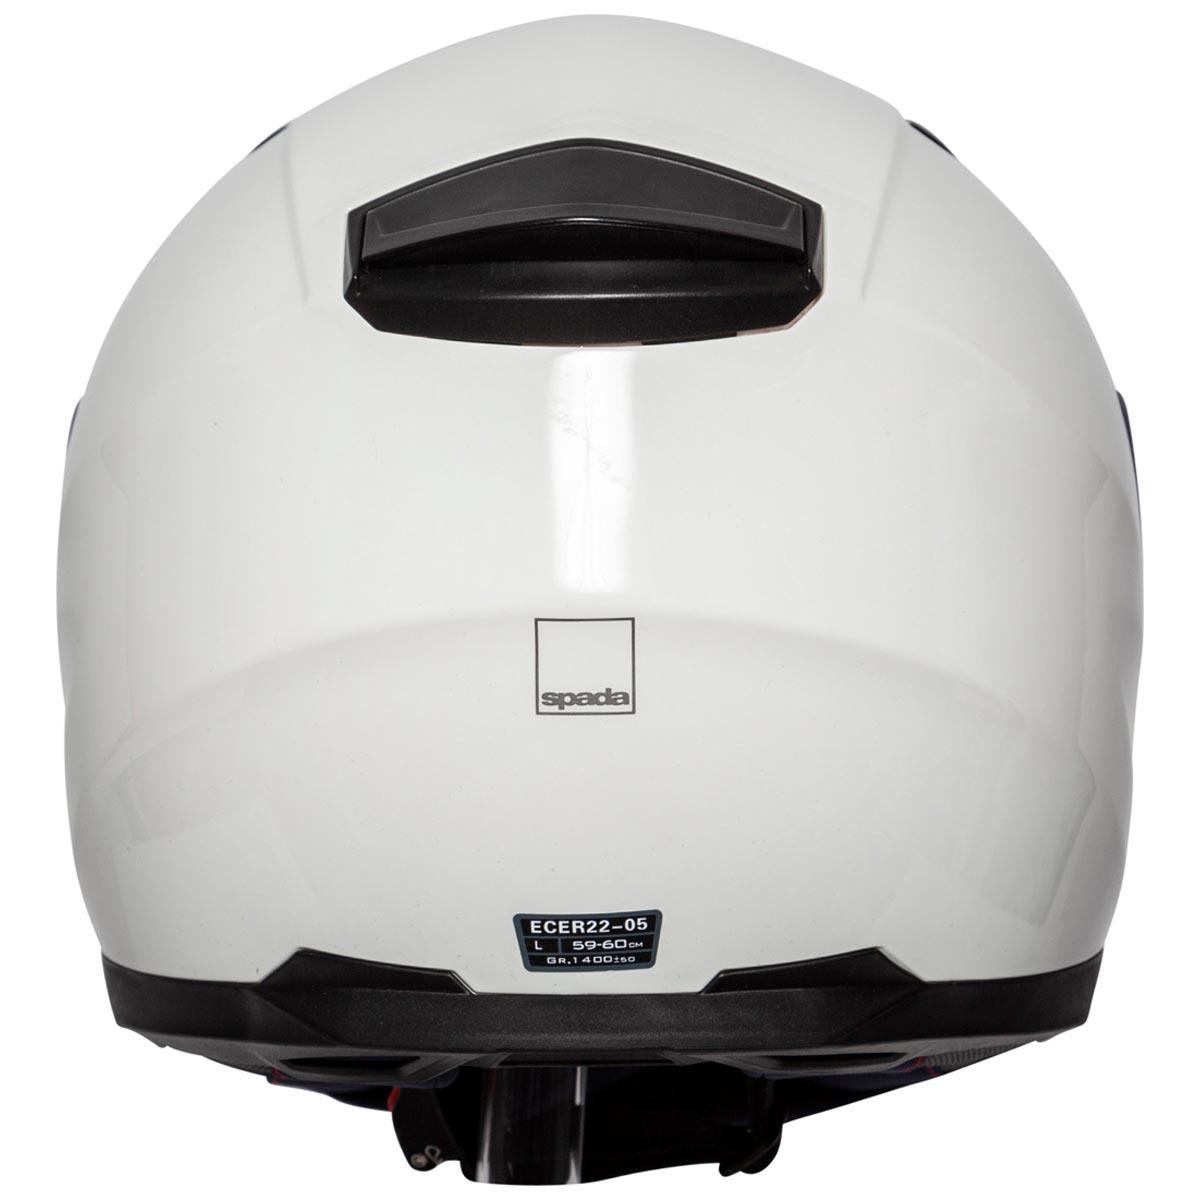 Spada Raiden Helmet - White - Browse our range of Helmet: Full Face - getgearedshop 